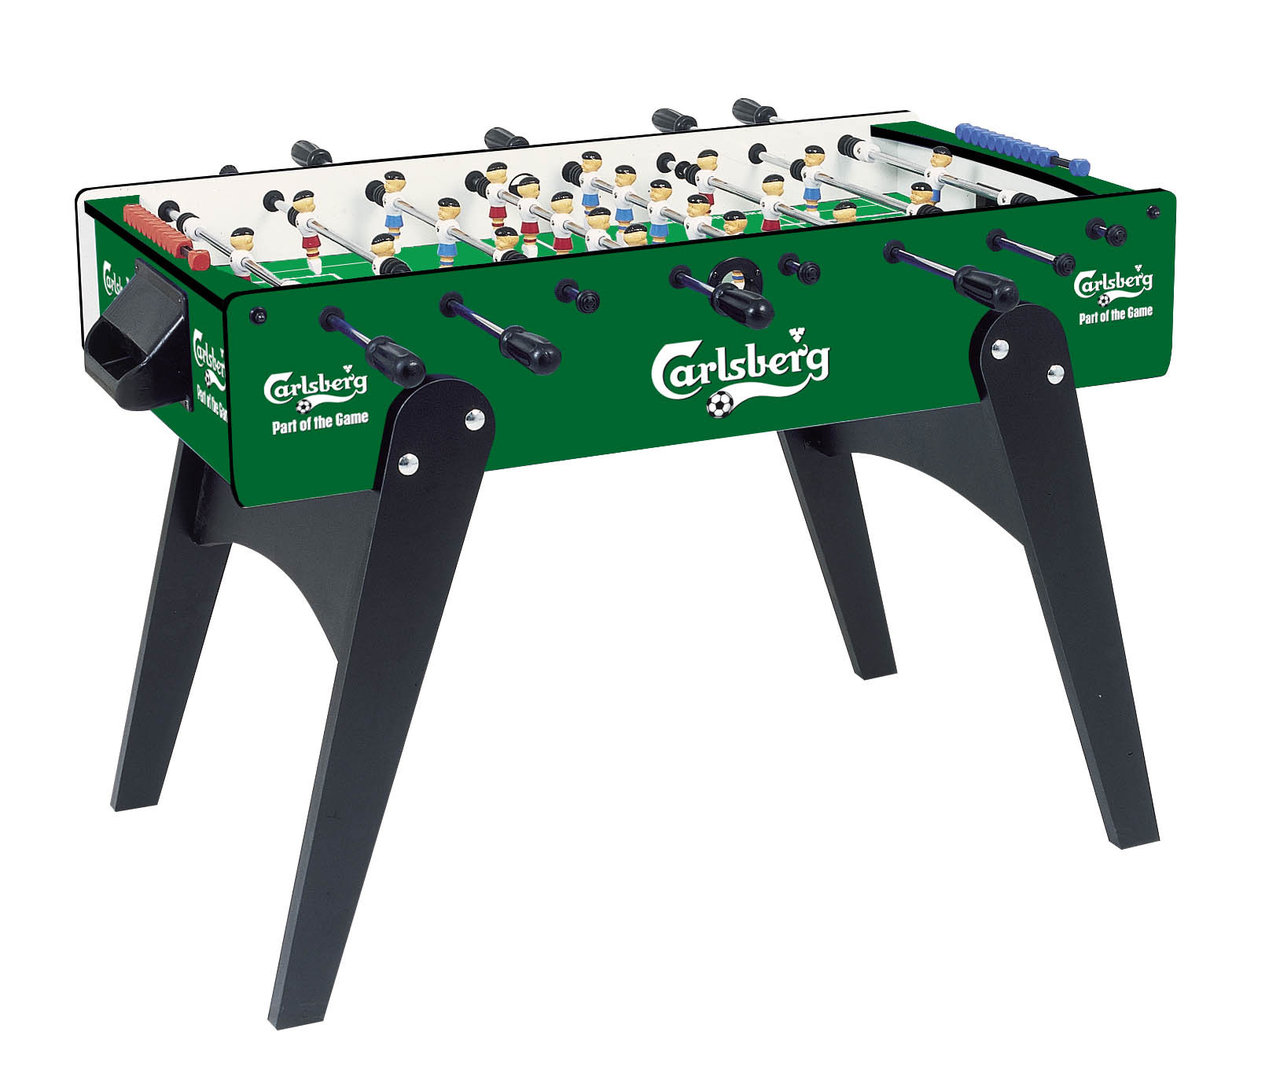 Garlando foosball tables with branding